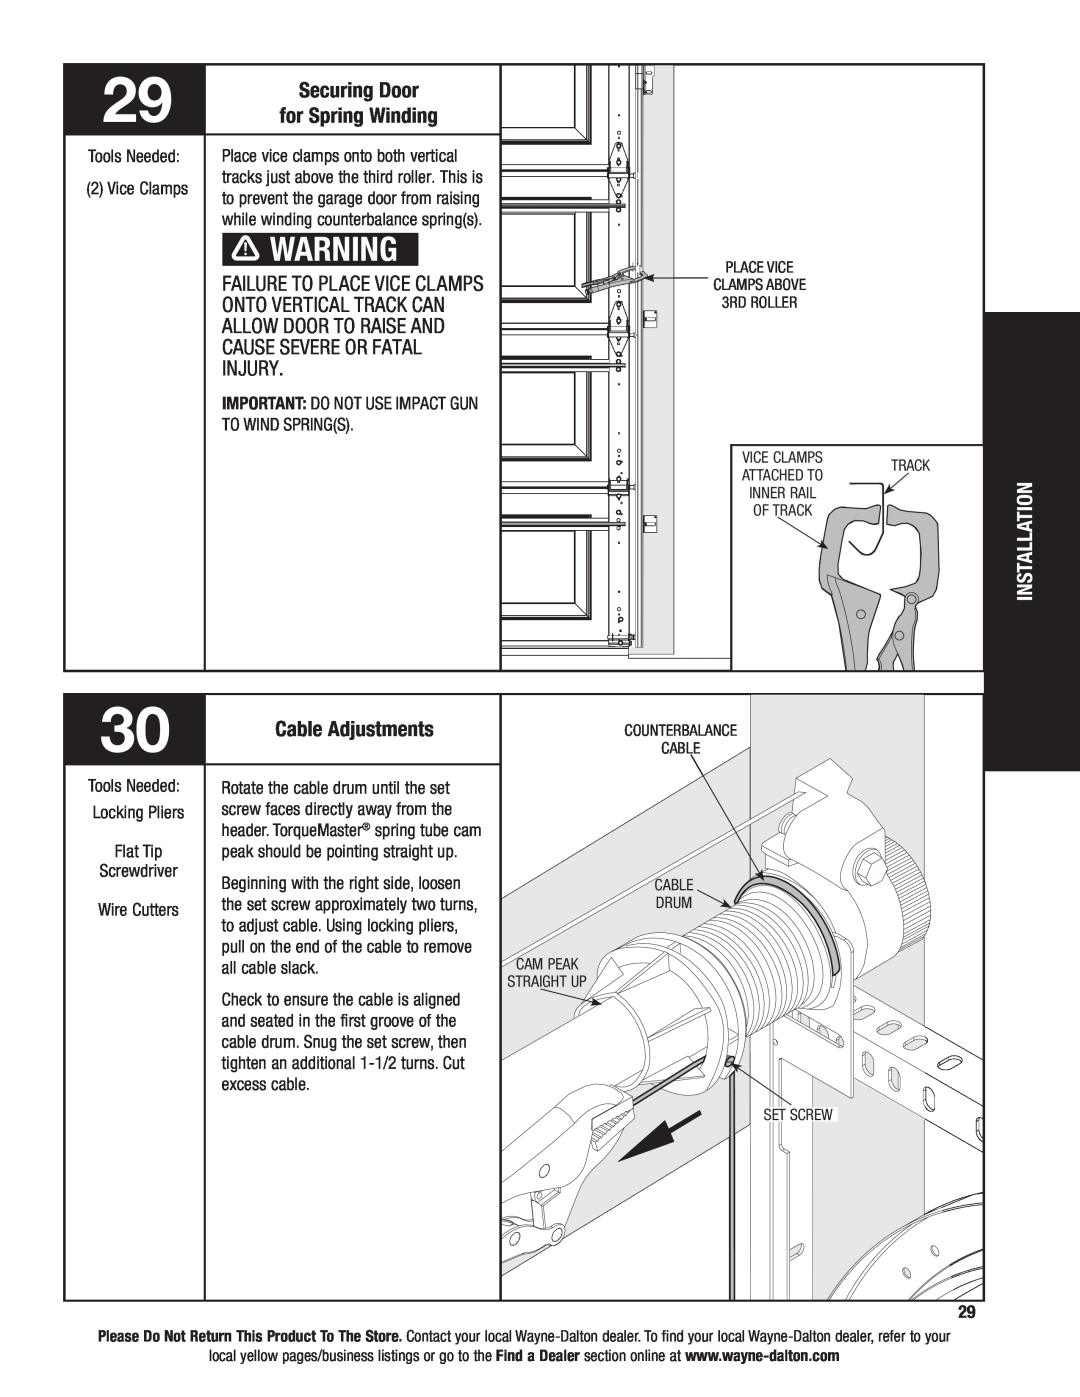 Wayne-Dalton 46 installation instructions Securing Door, for Spring Winding, Installation, Cable Adjustments 